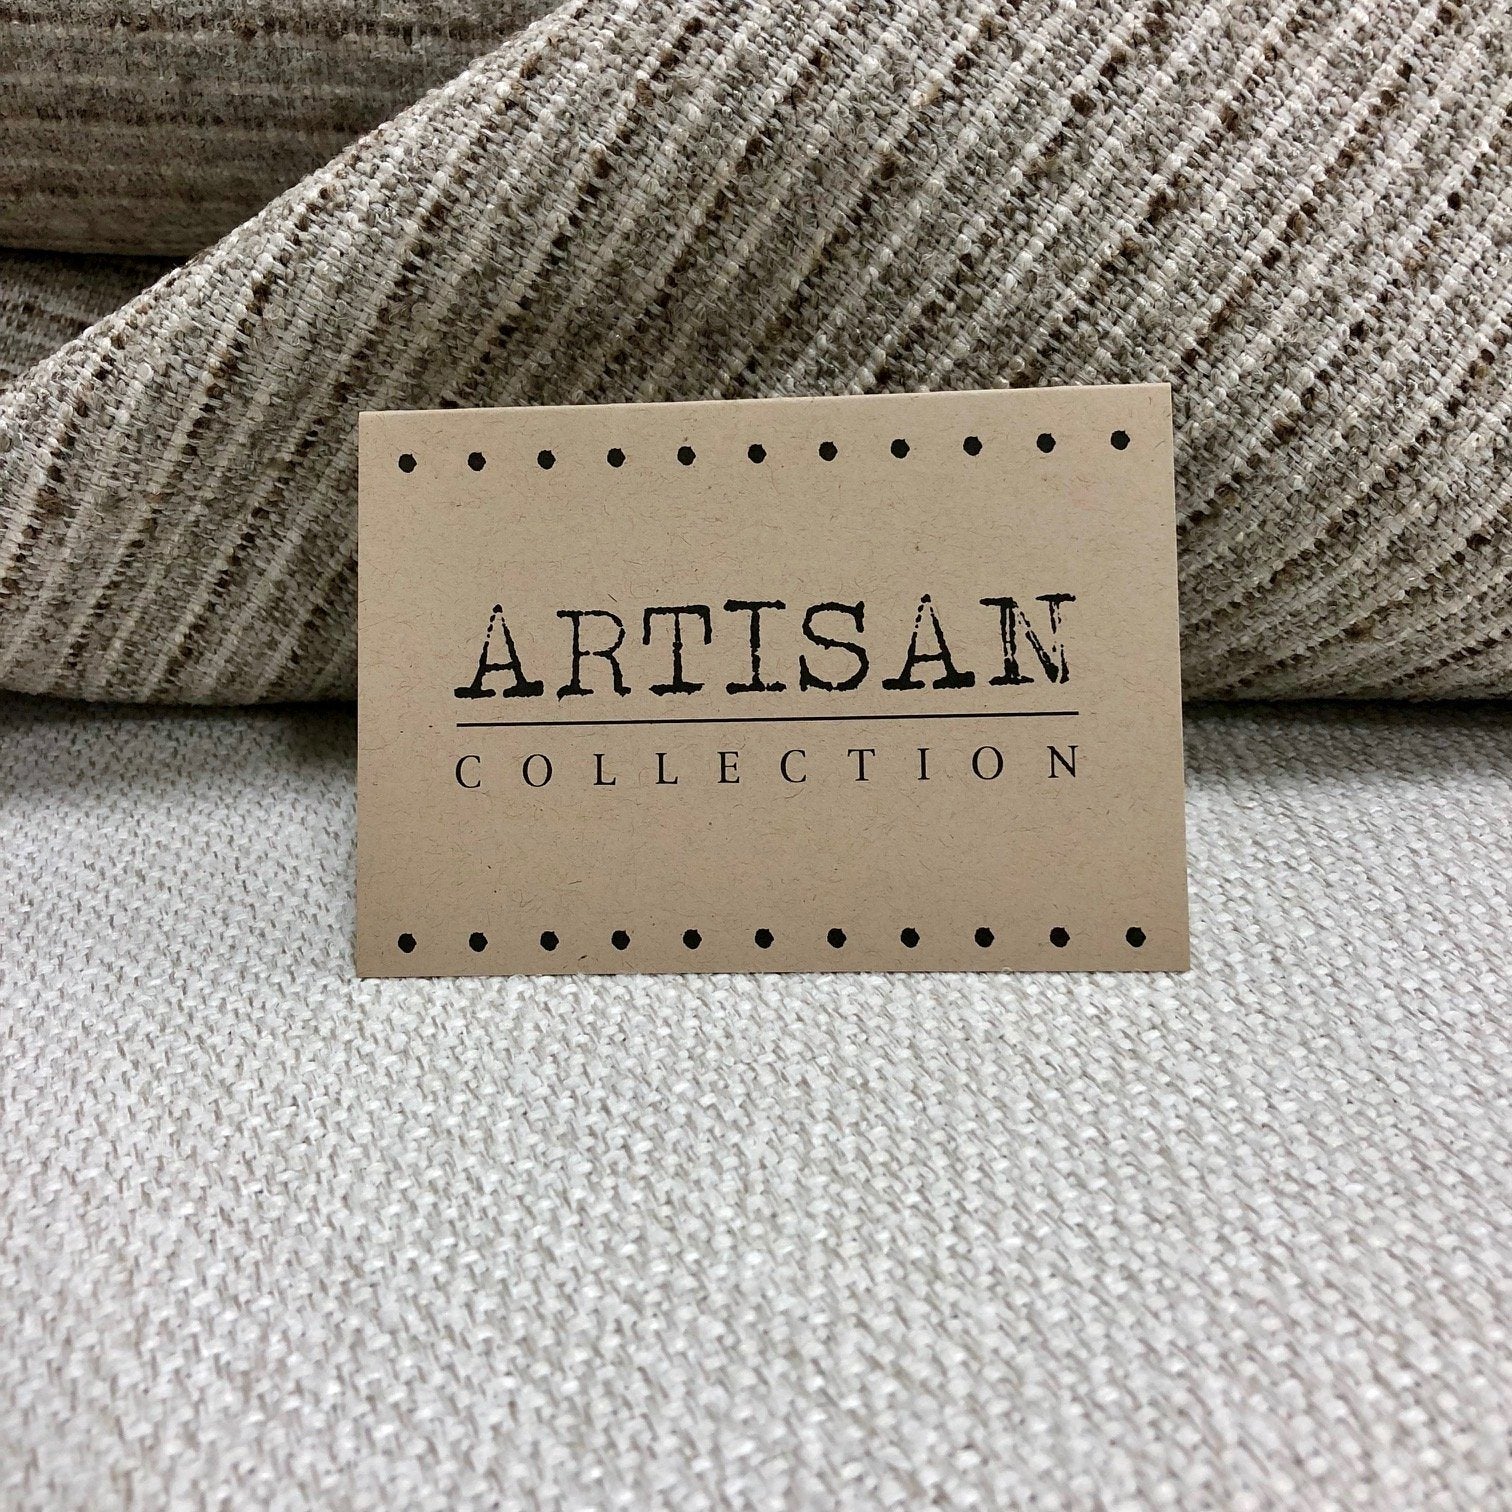 The Artisan Collection